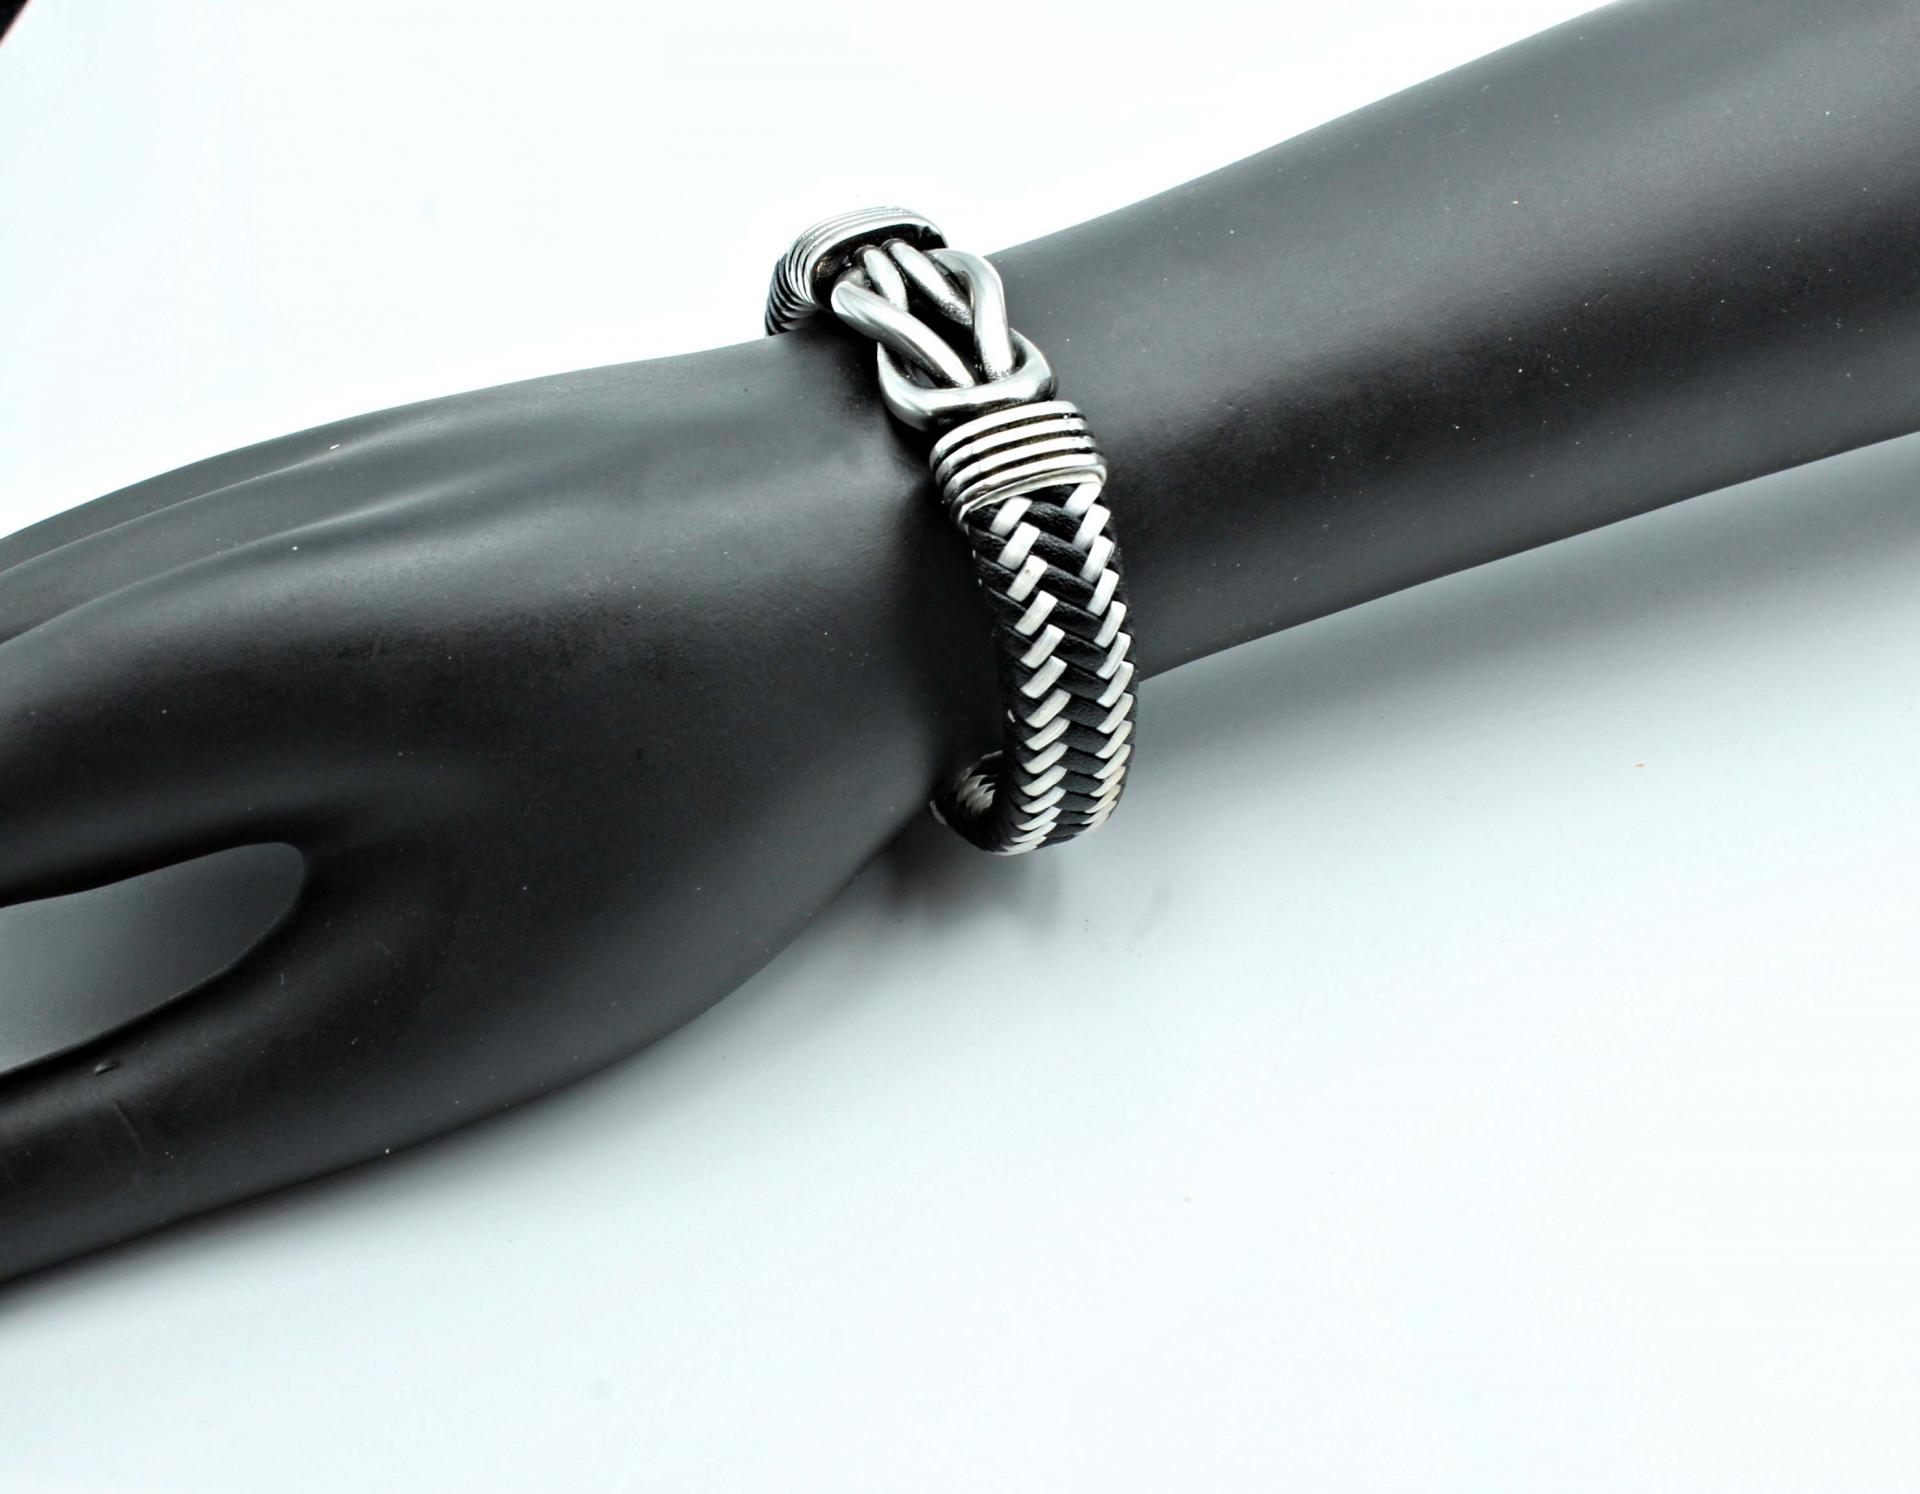 Knot Design Black & White Unisex Leather Bracelet